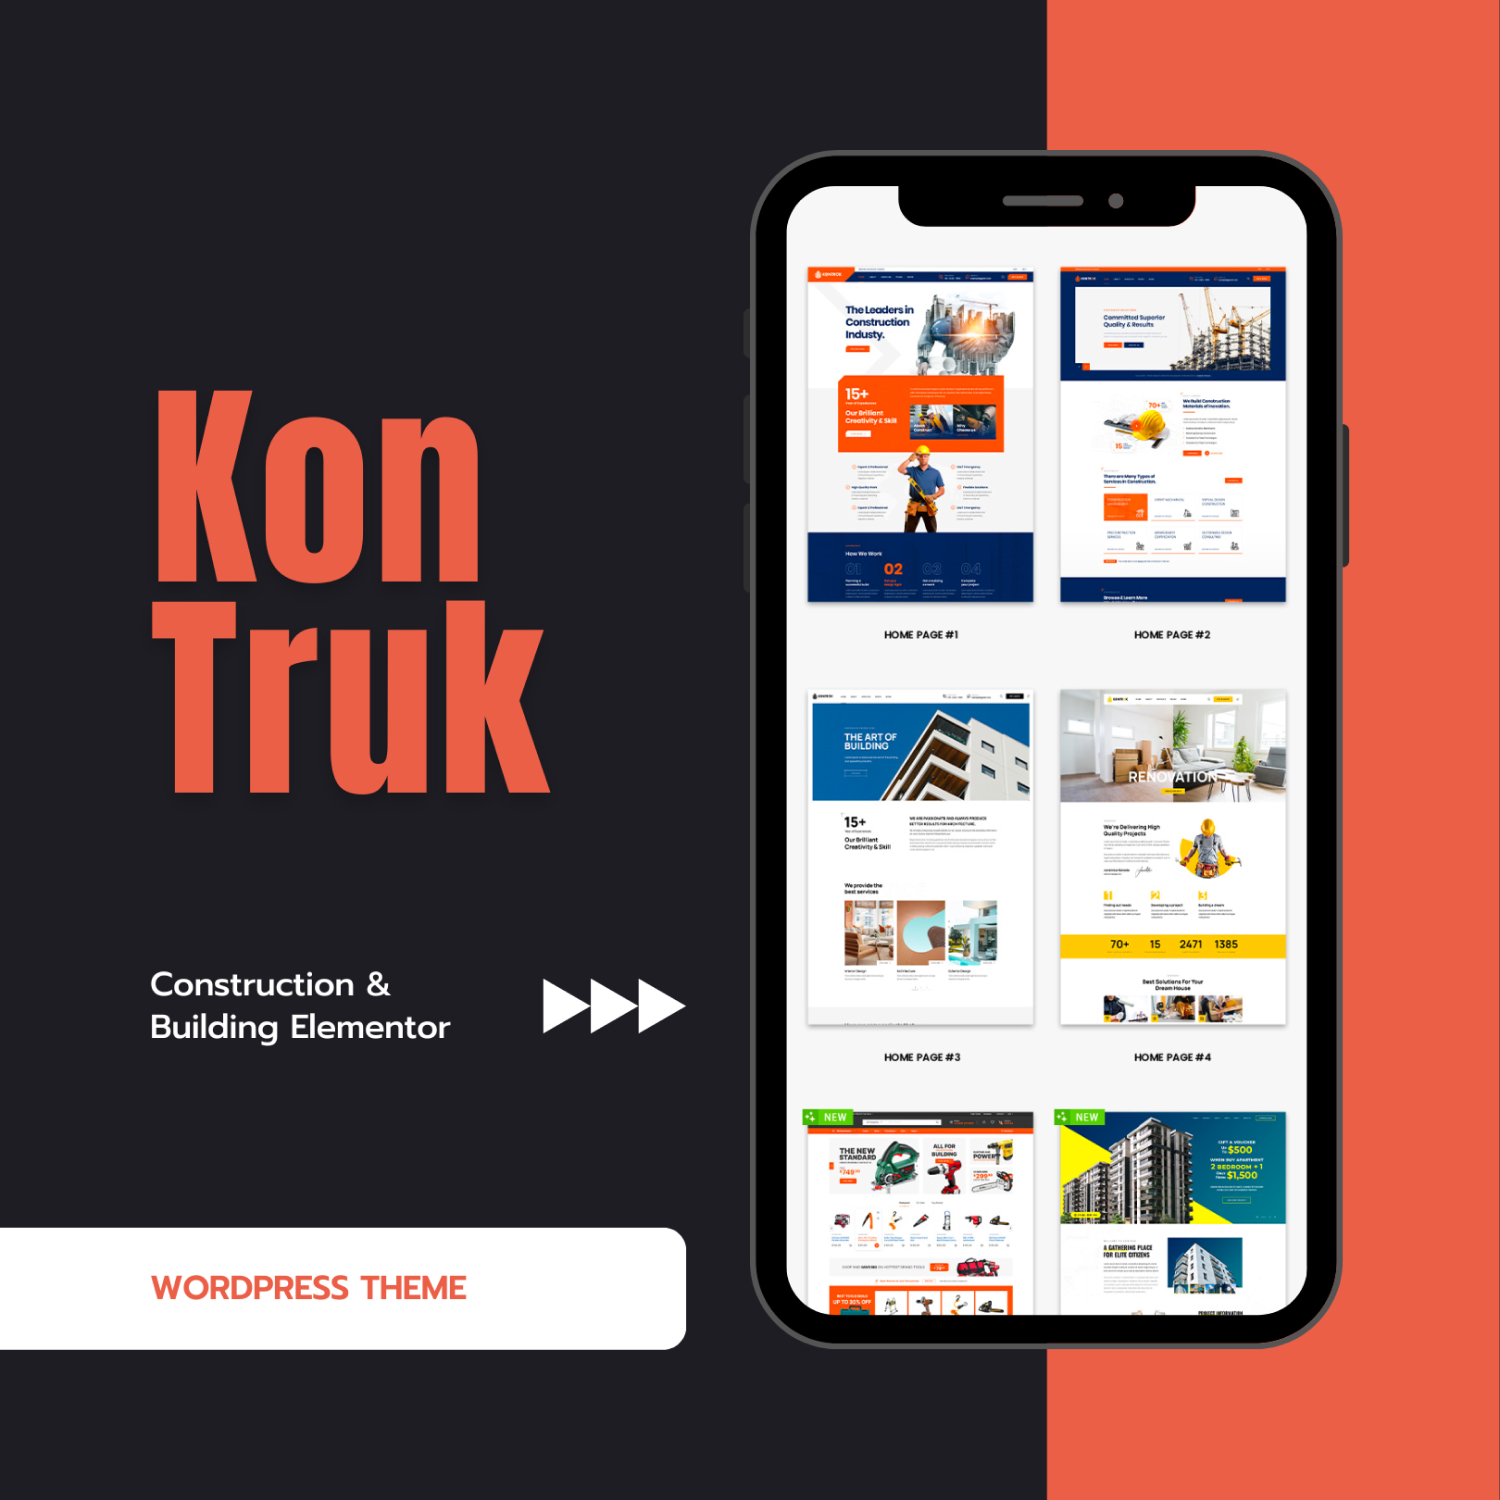 KonTruk - Construction & Building Elementor WordPress Theme.